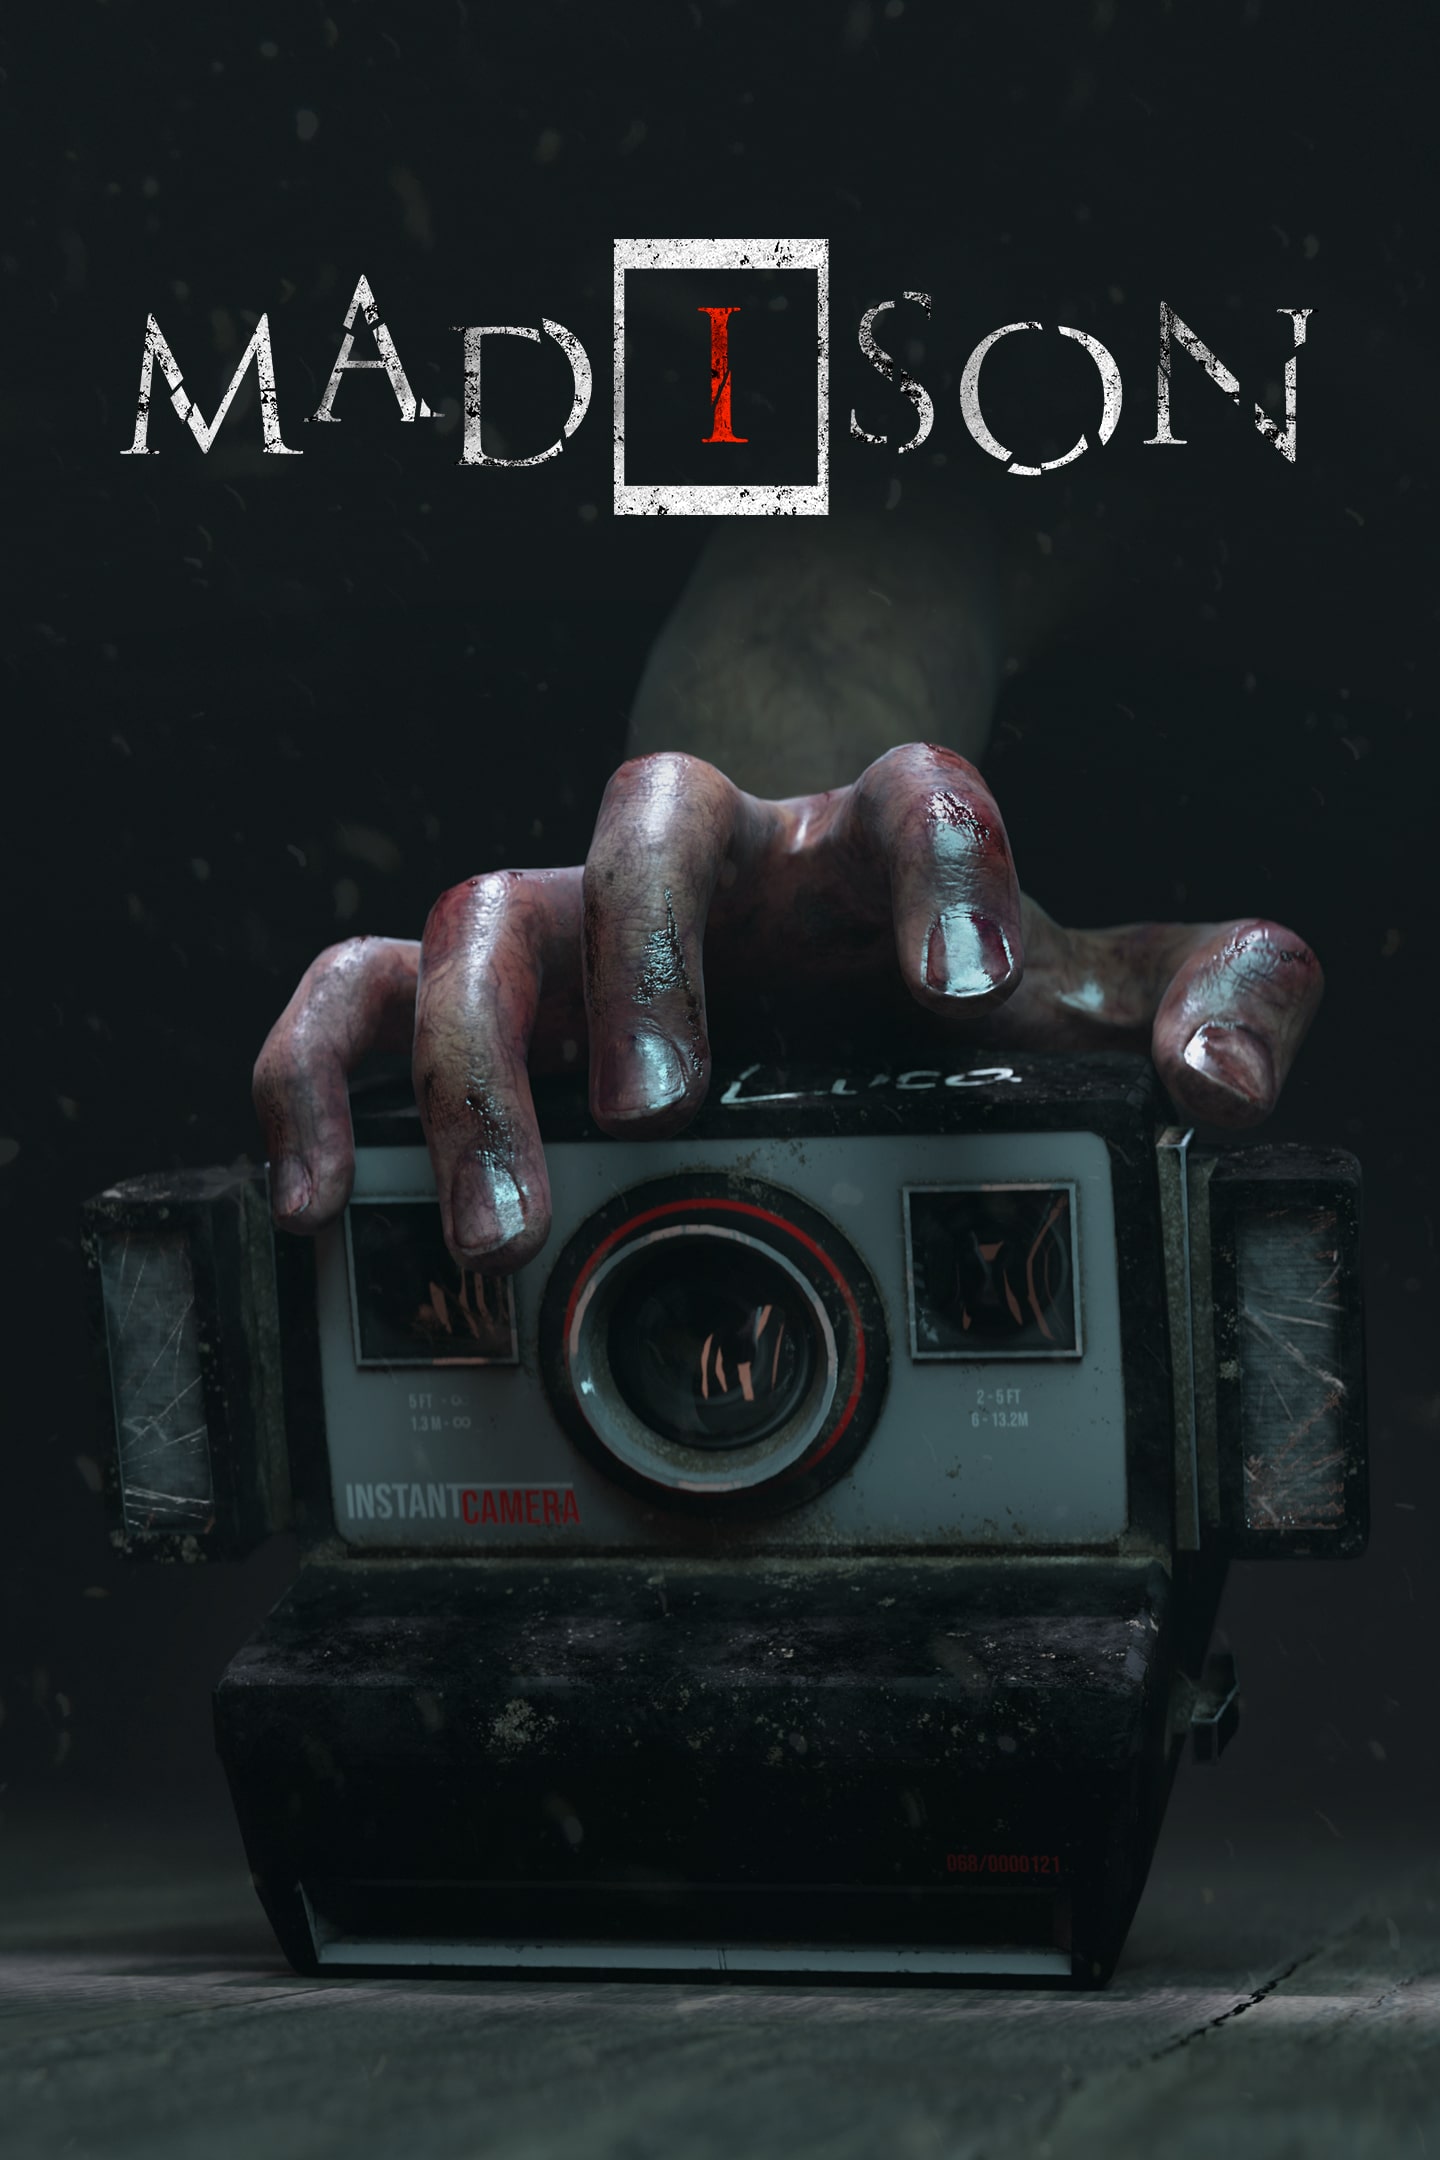 MADiSON Possessed Edition - PS5 —